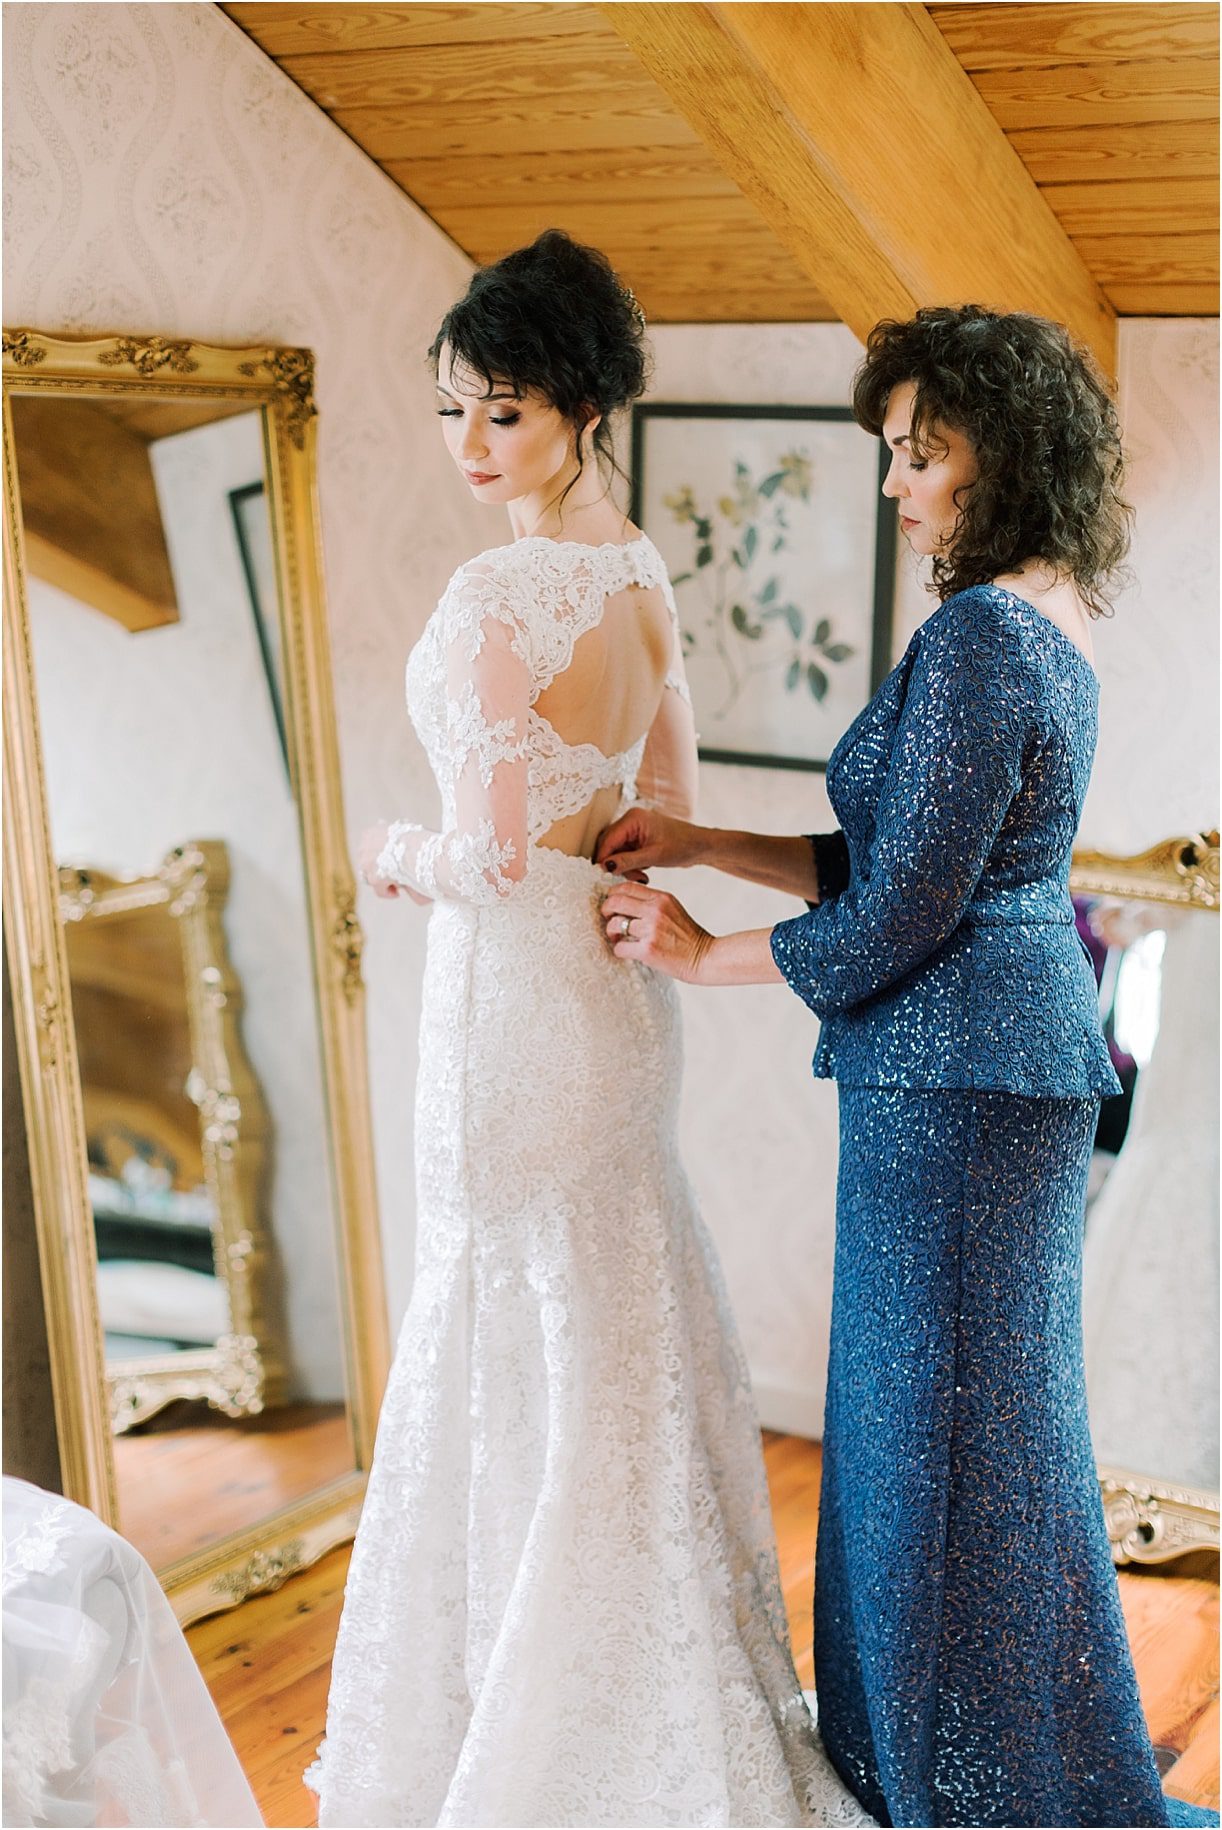 Dusty Blue Wedding Color Palette | Hill City Bride Virginia Weddings Wedding Blog | Something Blue Mother of Bride